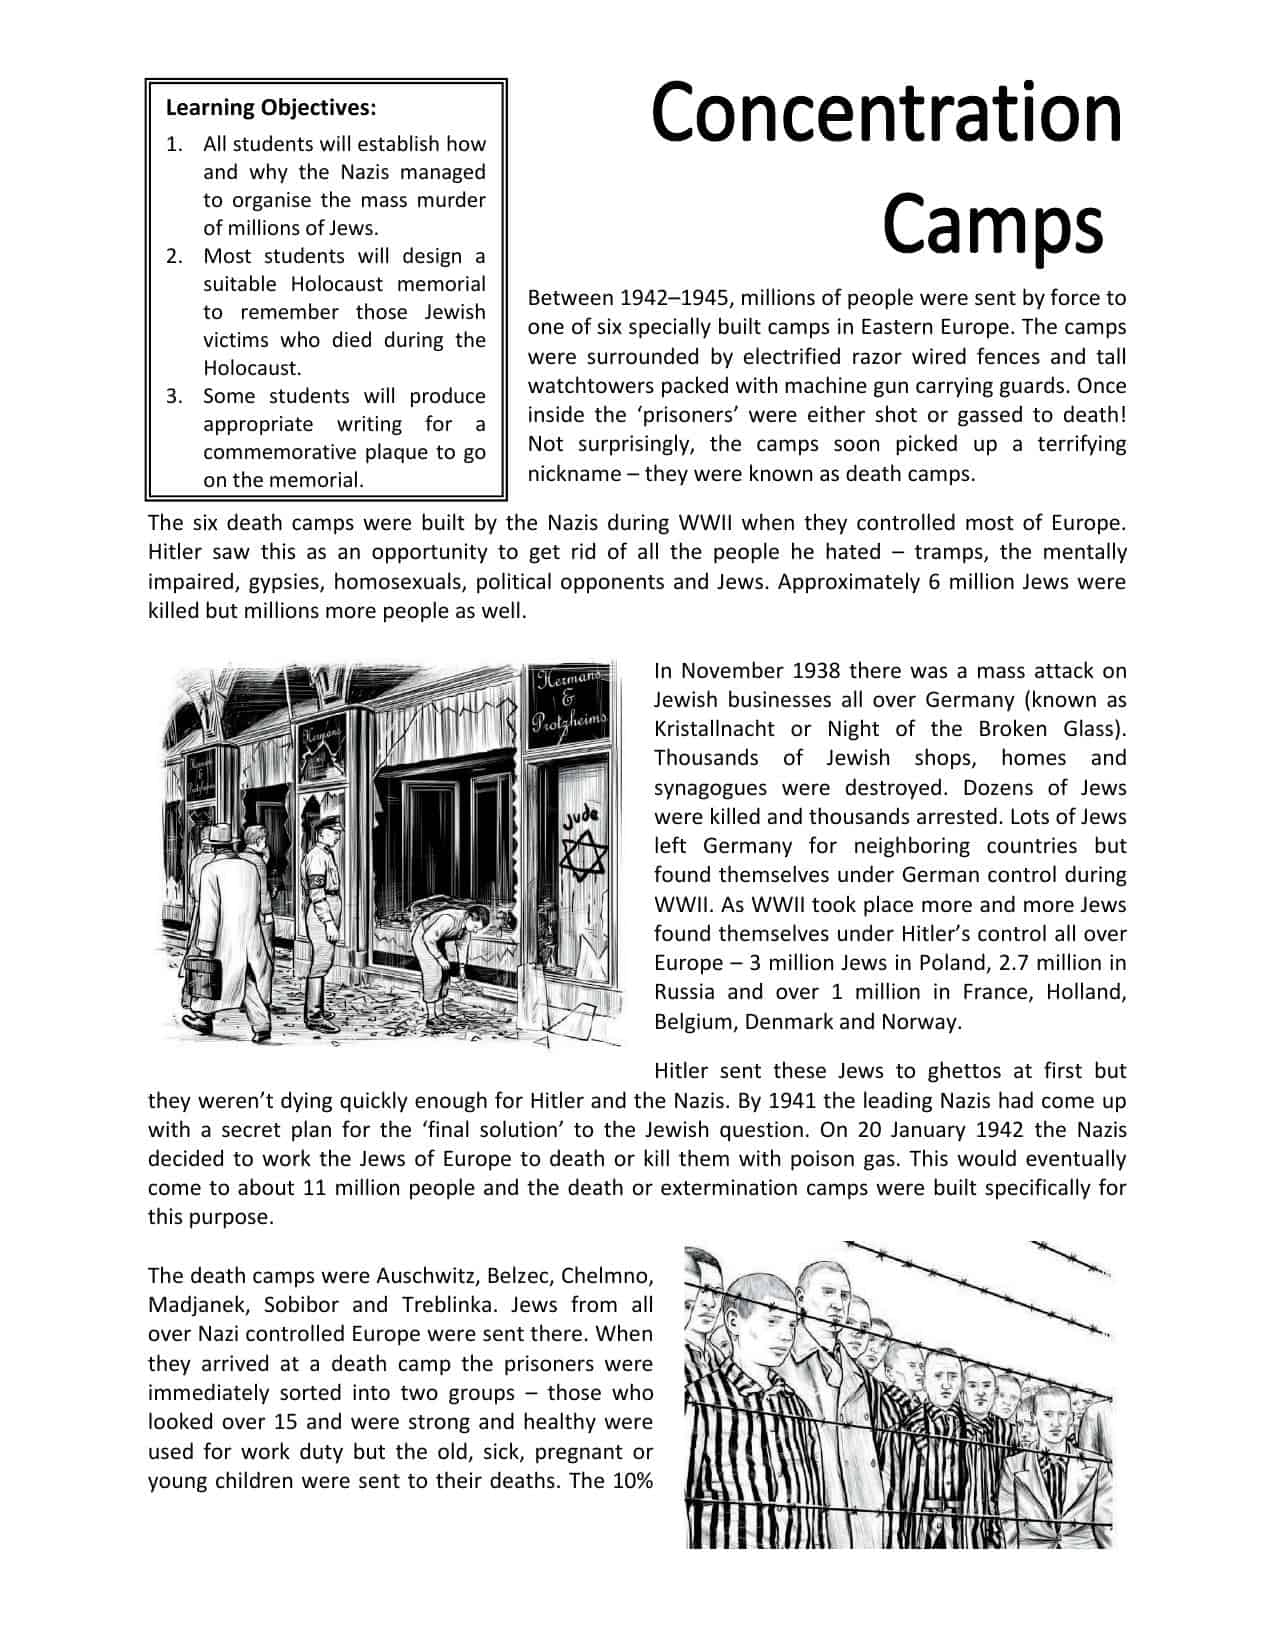 concentration-camp-activity-worksheet